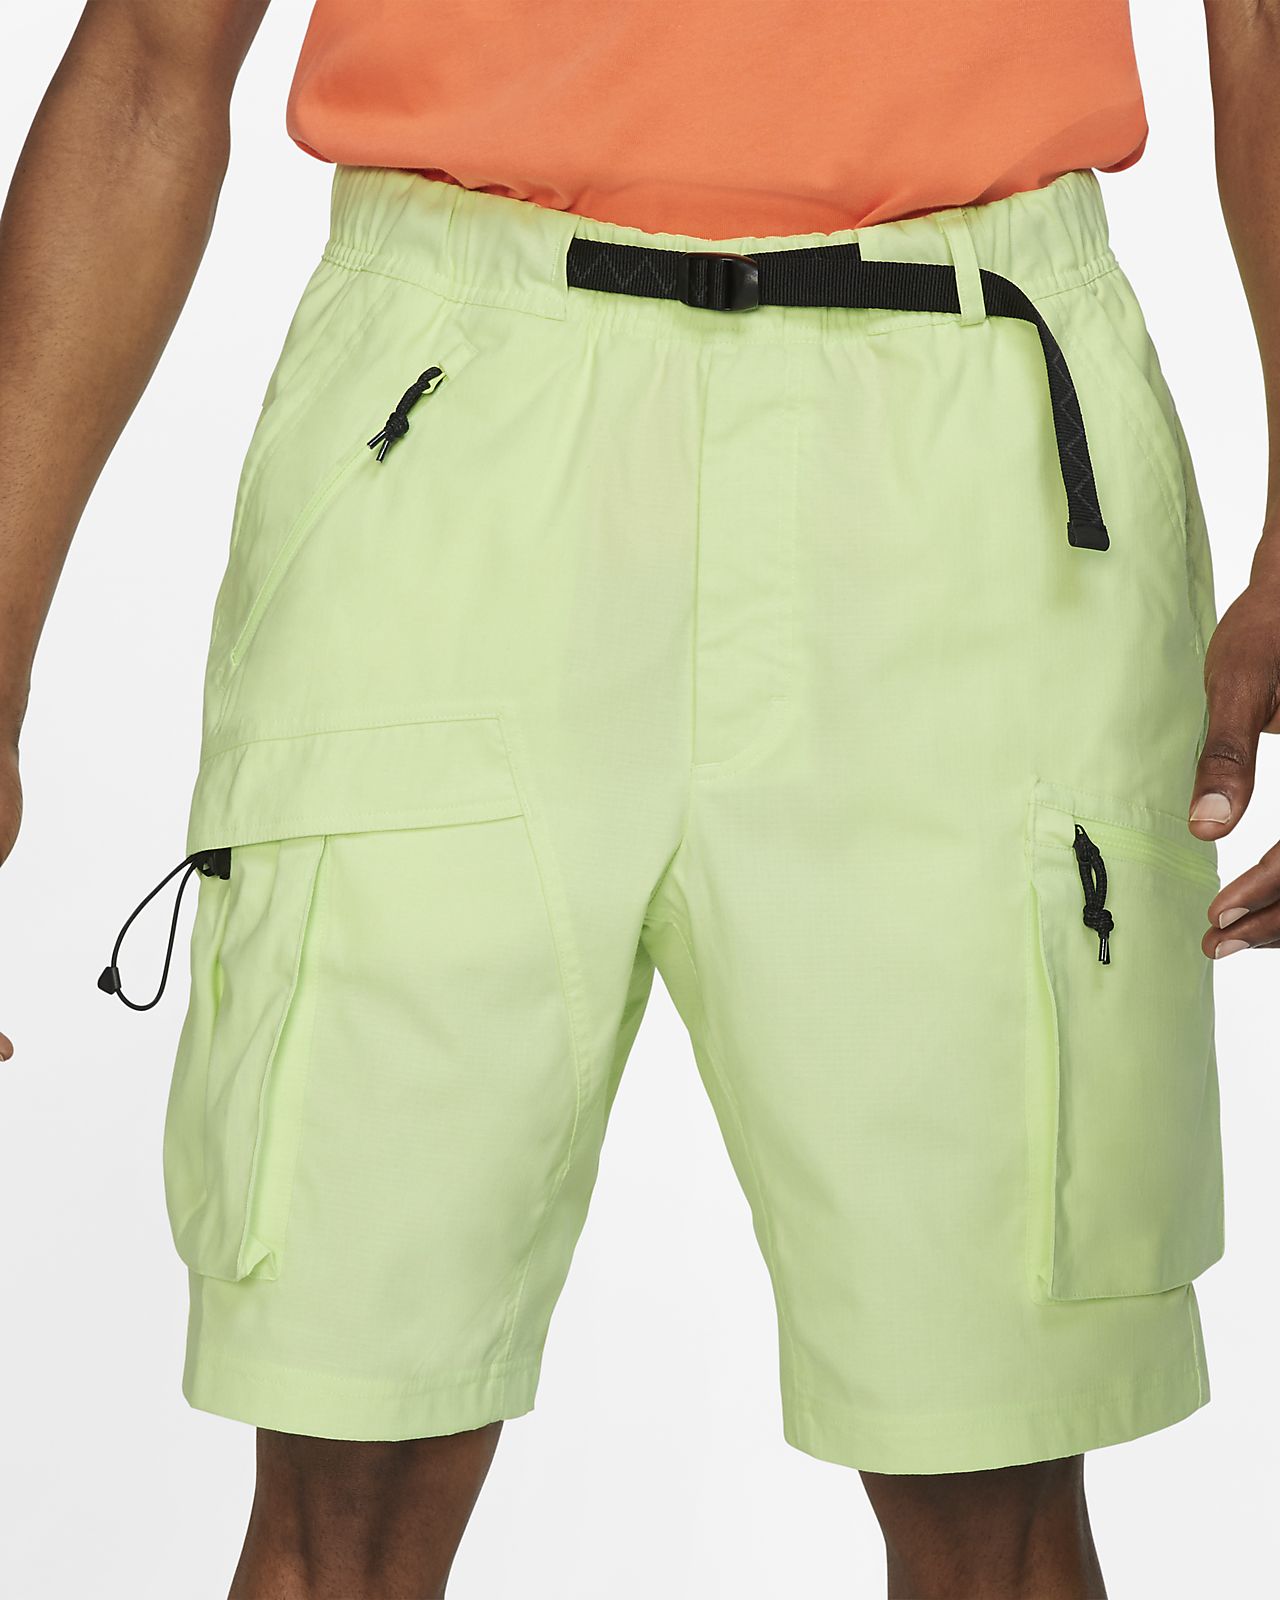 lime green nike shorts